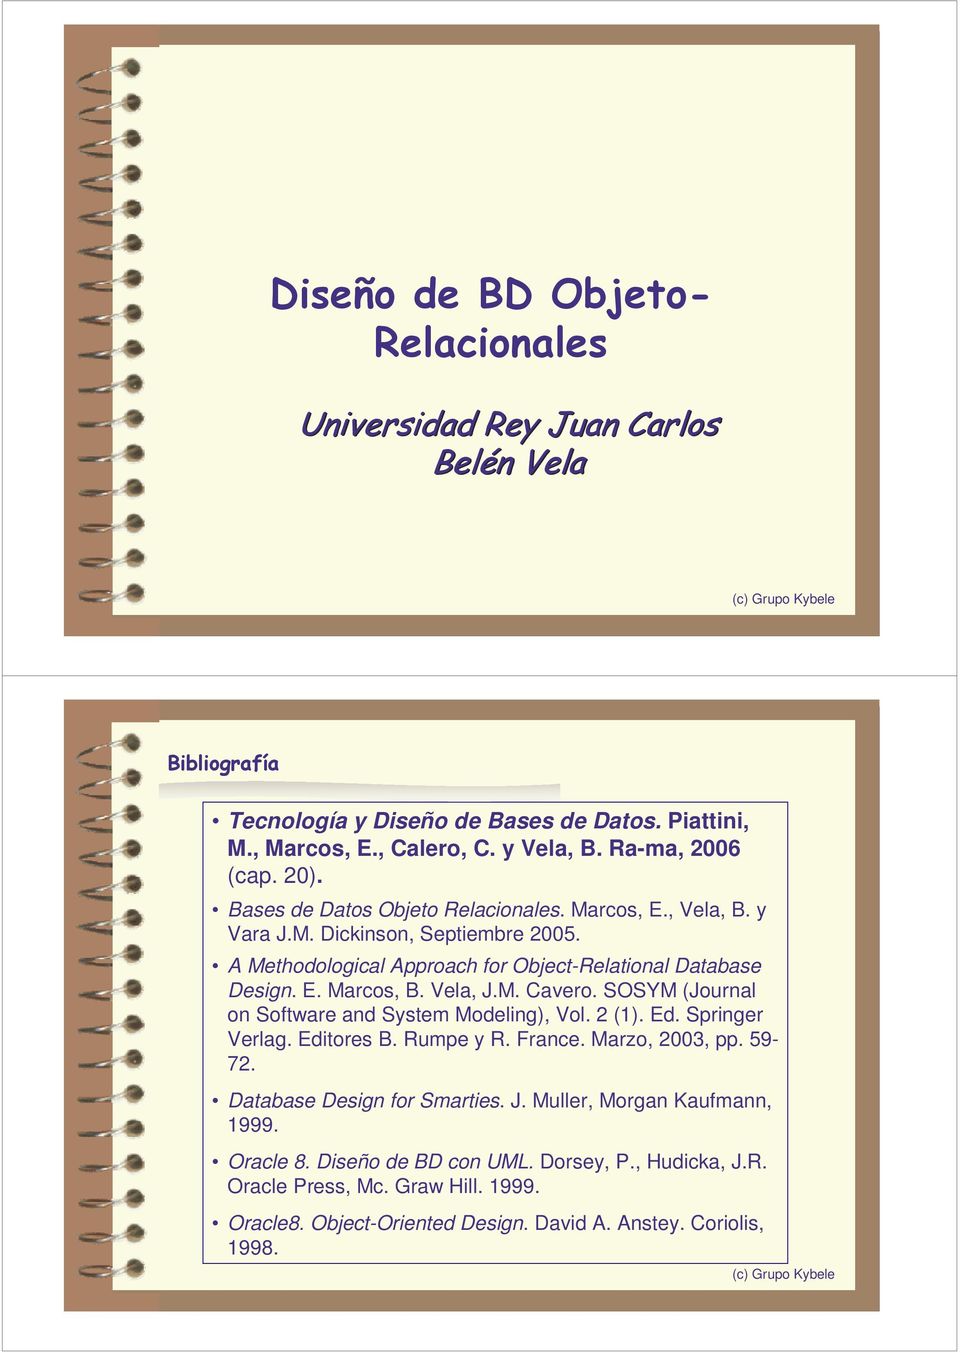 A Methodological Approach for Object-Relational Database Design. E. Marcos, B. Vela, J.M. Cavero. SOSYM (Journal on Software and System Modeling), Vol. 2 (1). Ed. Springer Verlag.